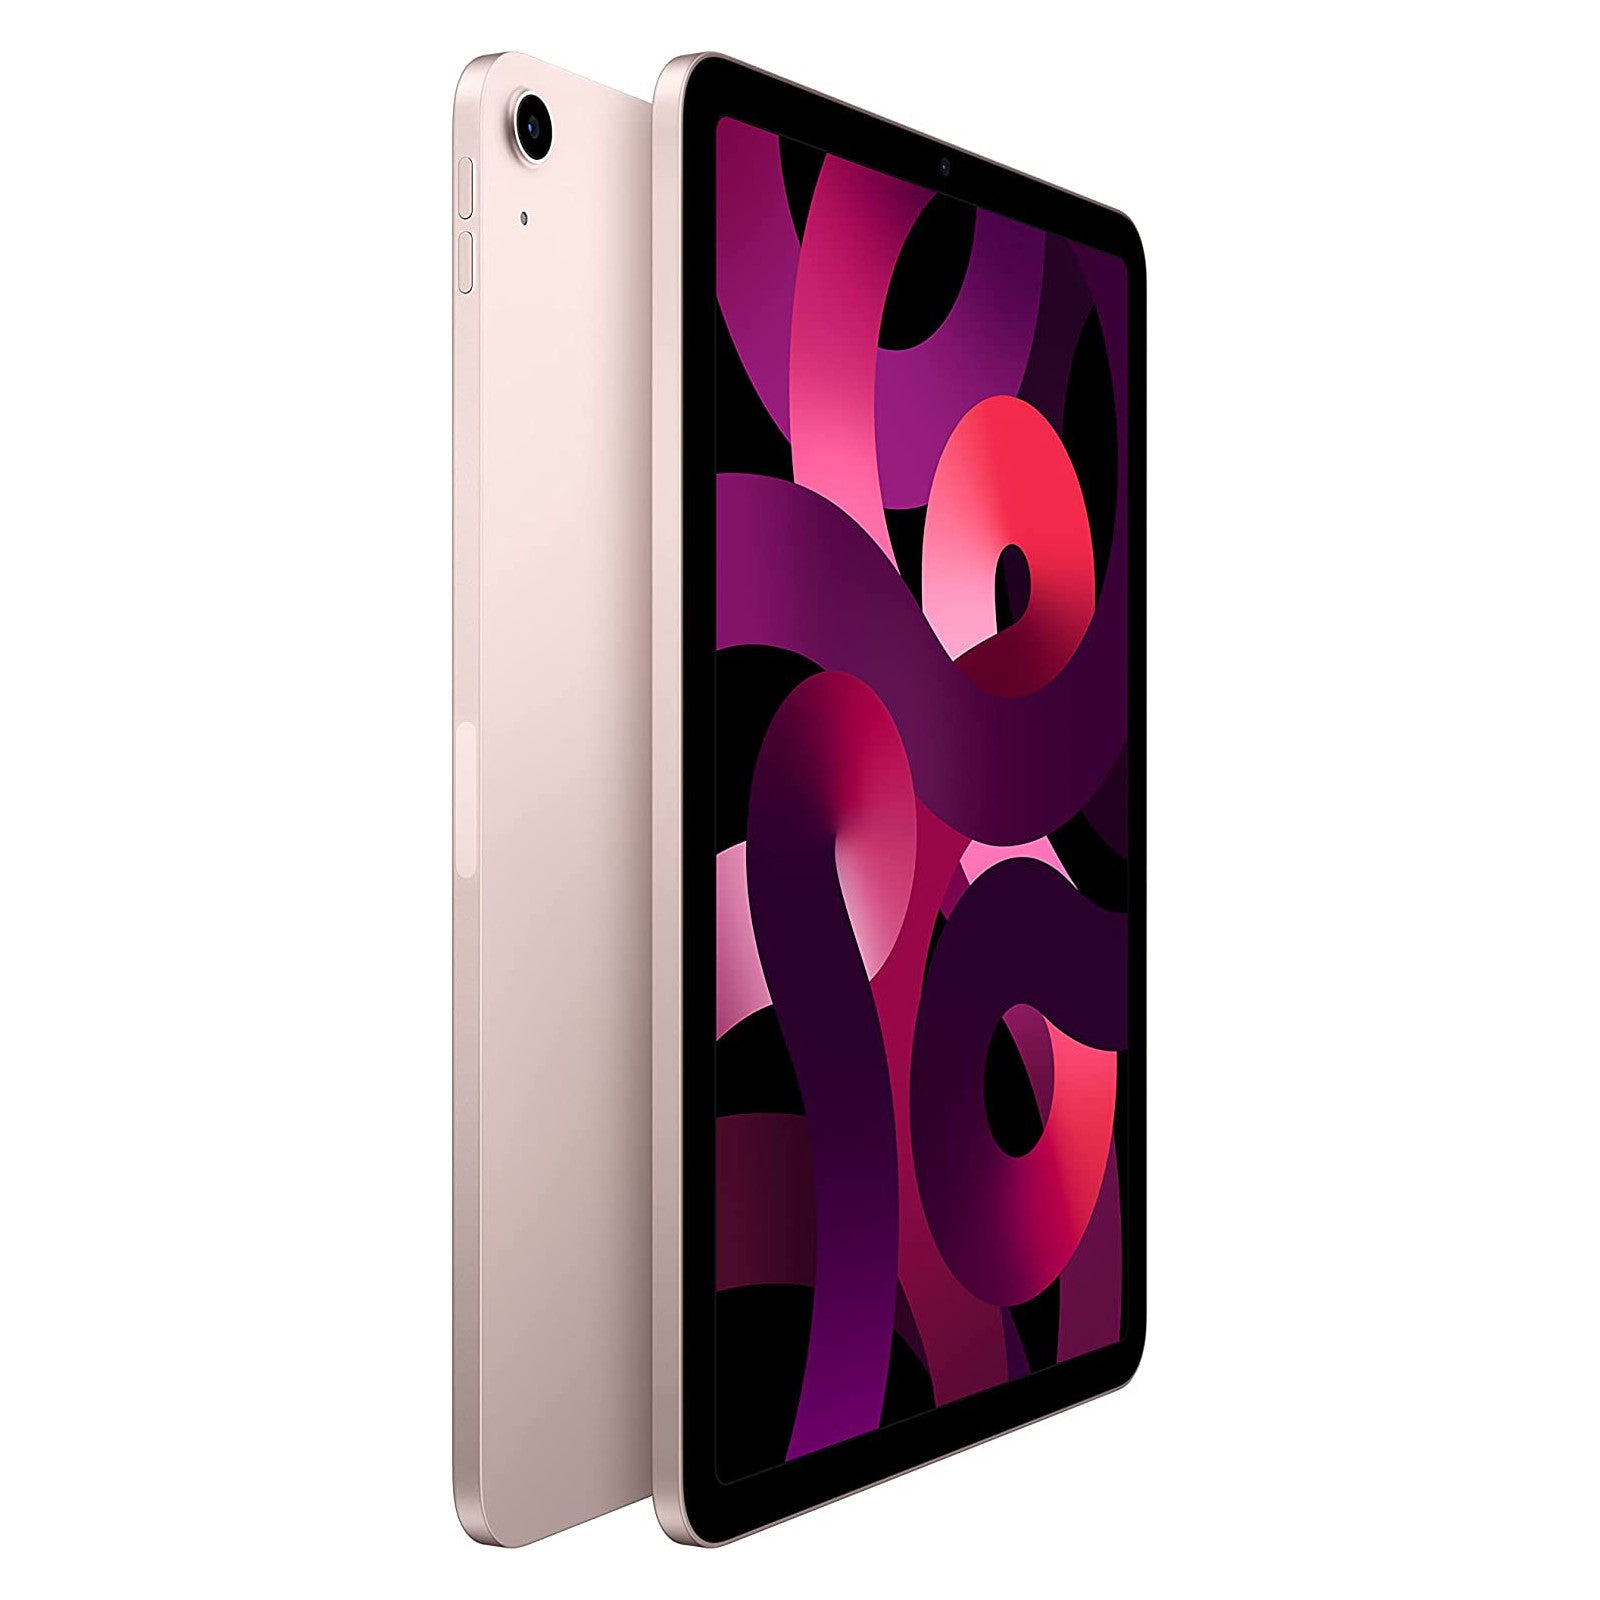 iPad Air 5 64GB WiFi & Cellular in Pink - Fair condition